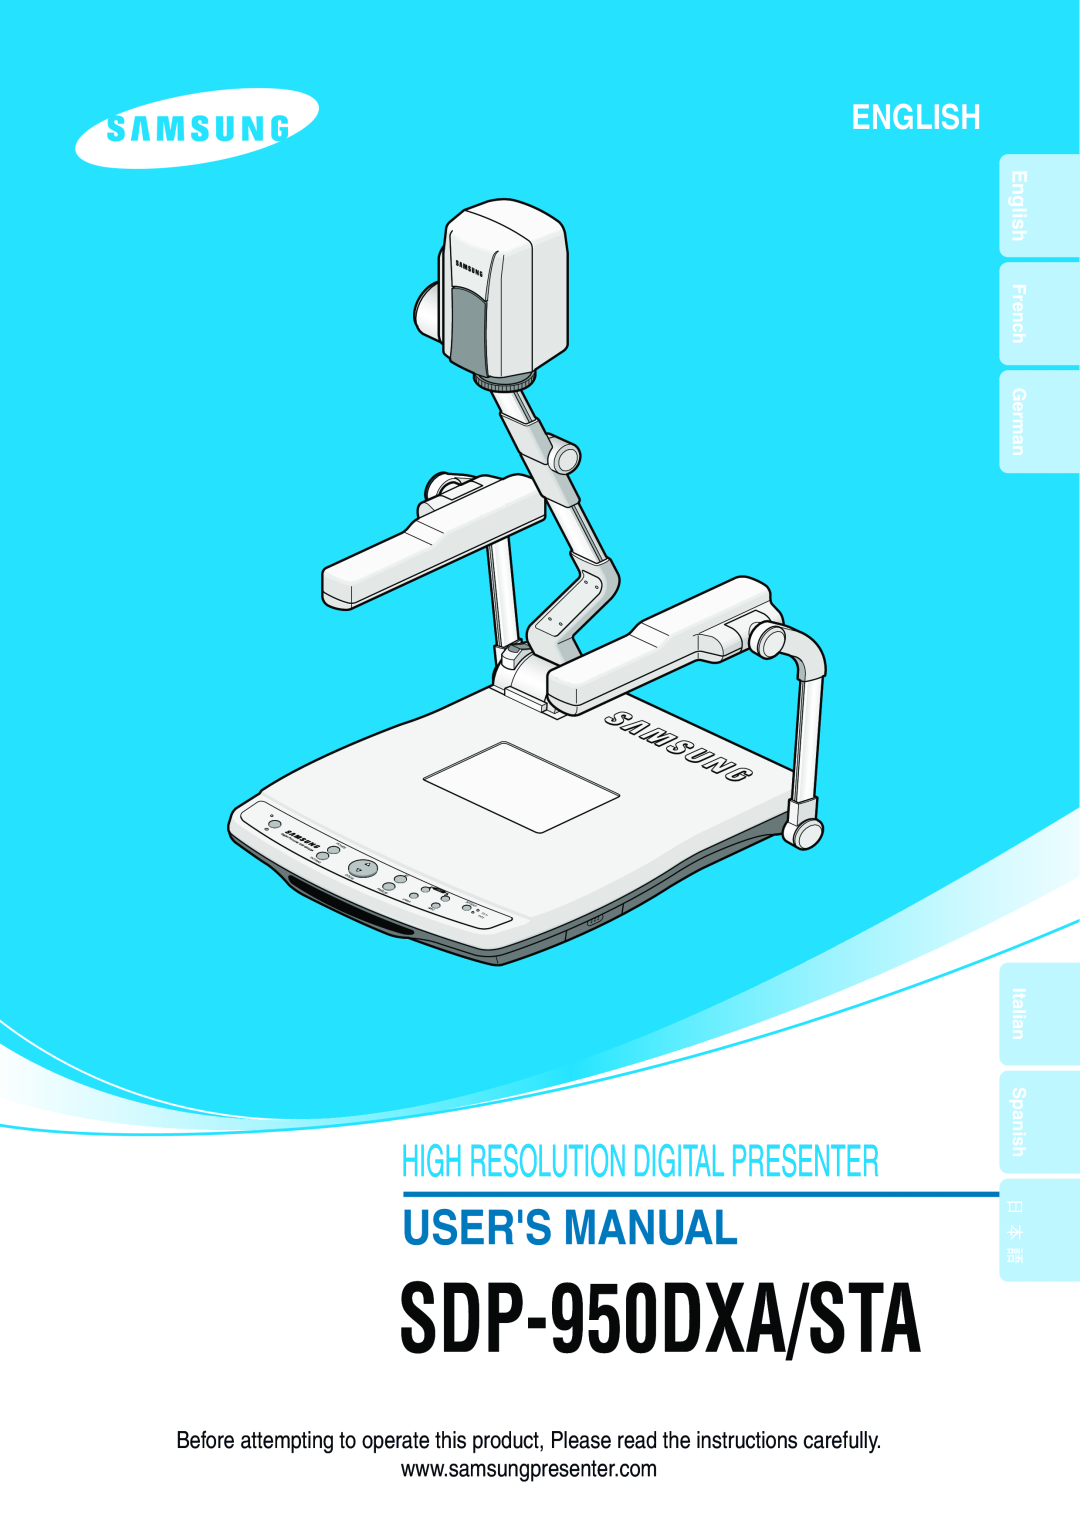 Altec Lansing user manual SDP-950DXA/STA, Users Manual, English, High Resolution Digital Presenter, Italian Spanish 